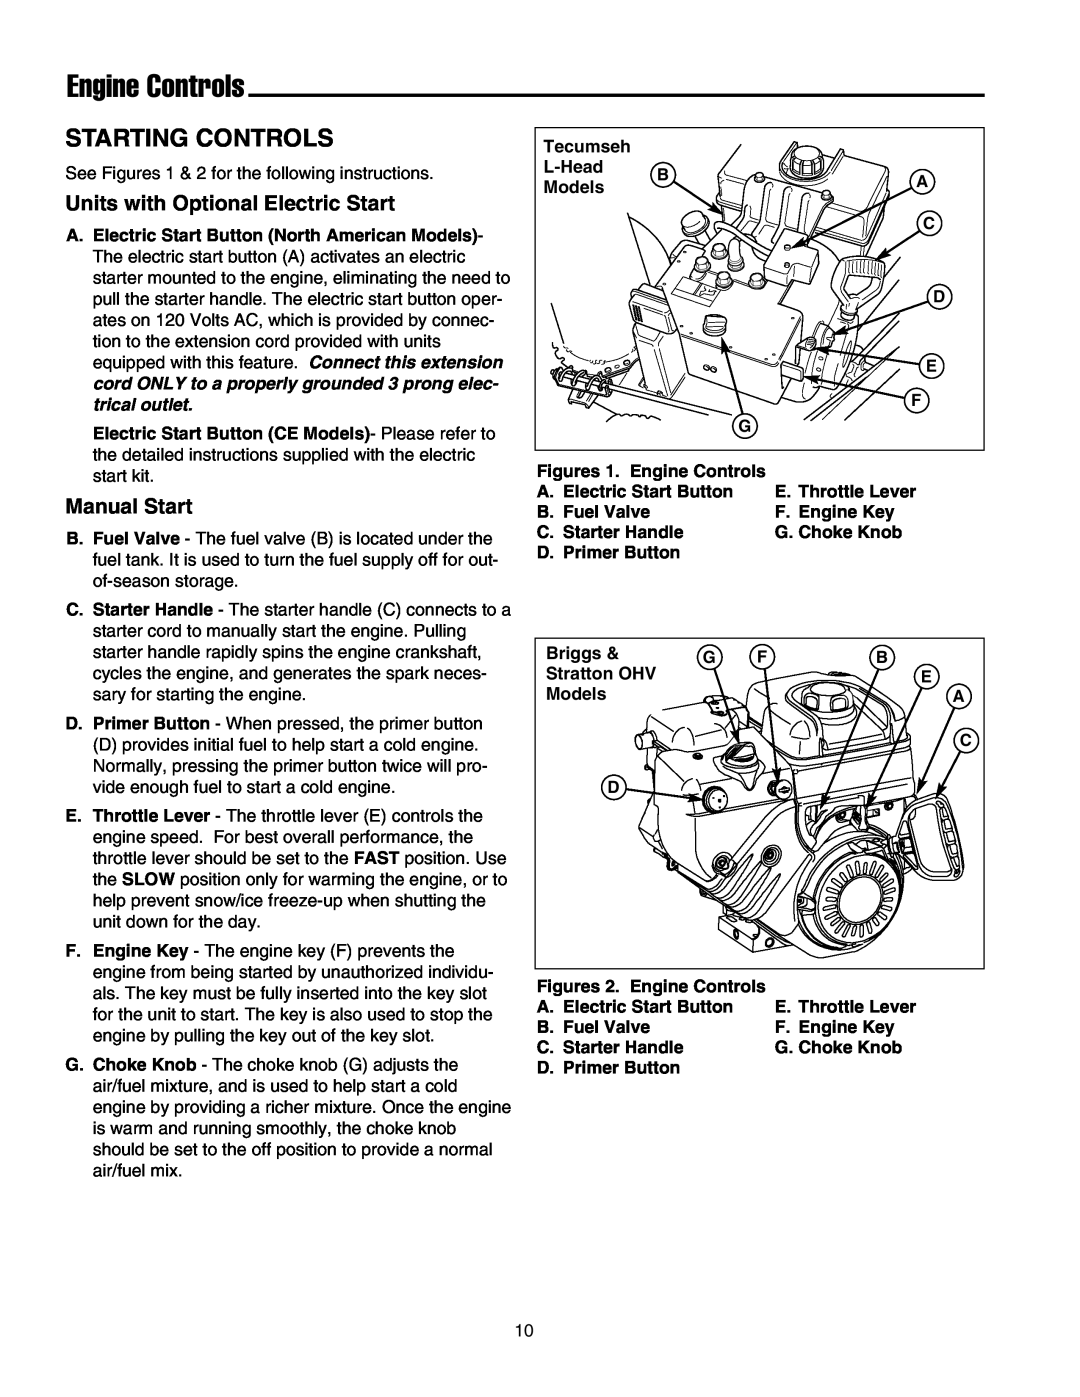 Snapper 860 manual Engine Controls, Starting Controls 